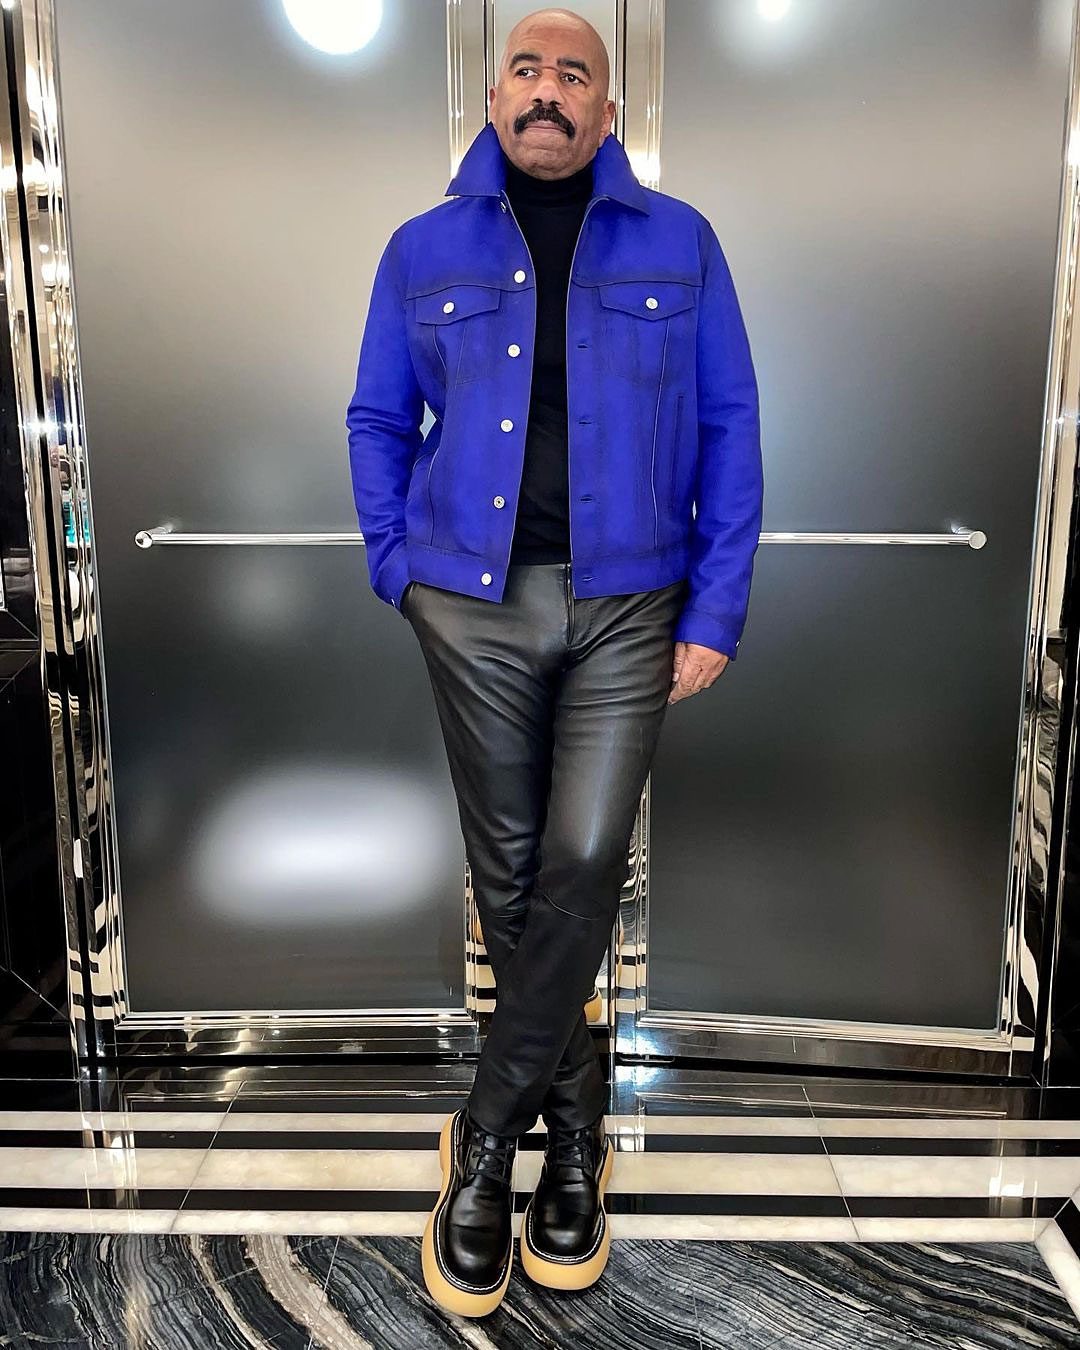 Viral Fashion Icon Steve Harvey Praises Wife For His Modernized Wardrobe -  Black Enterprise